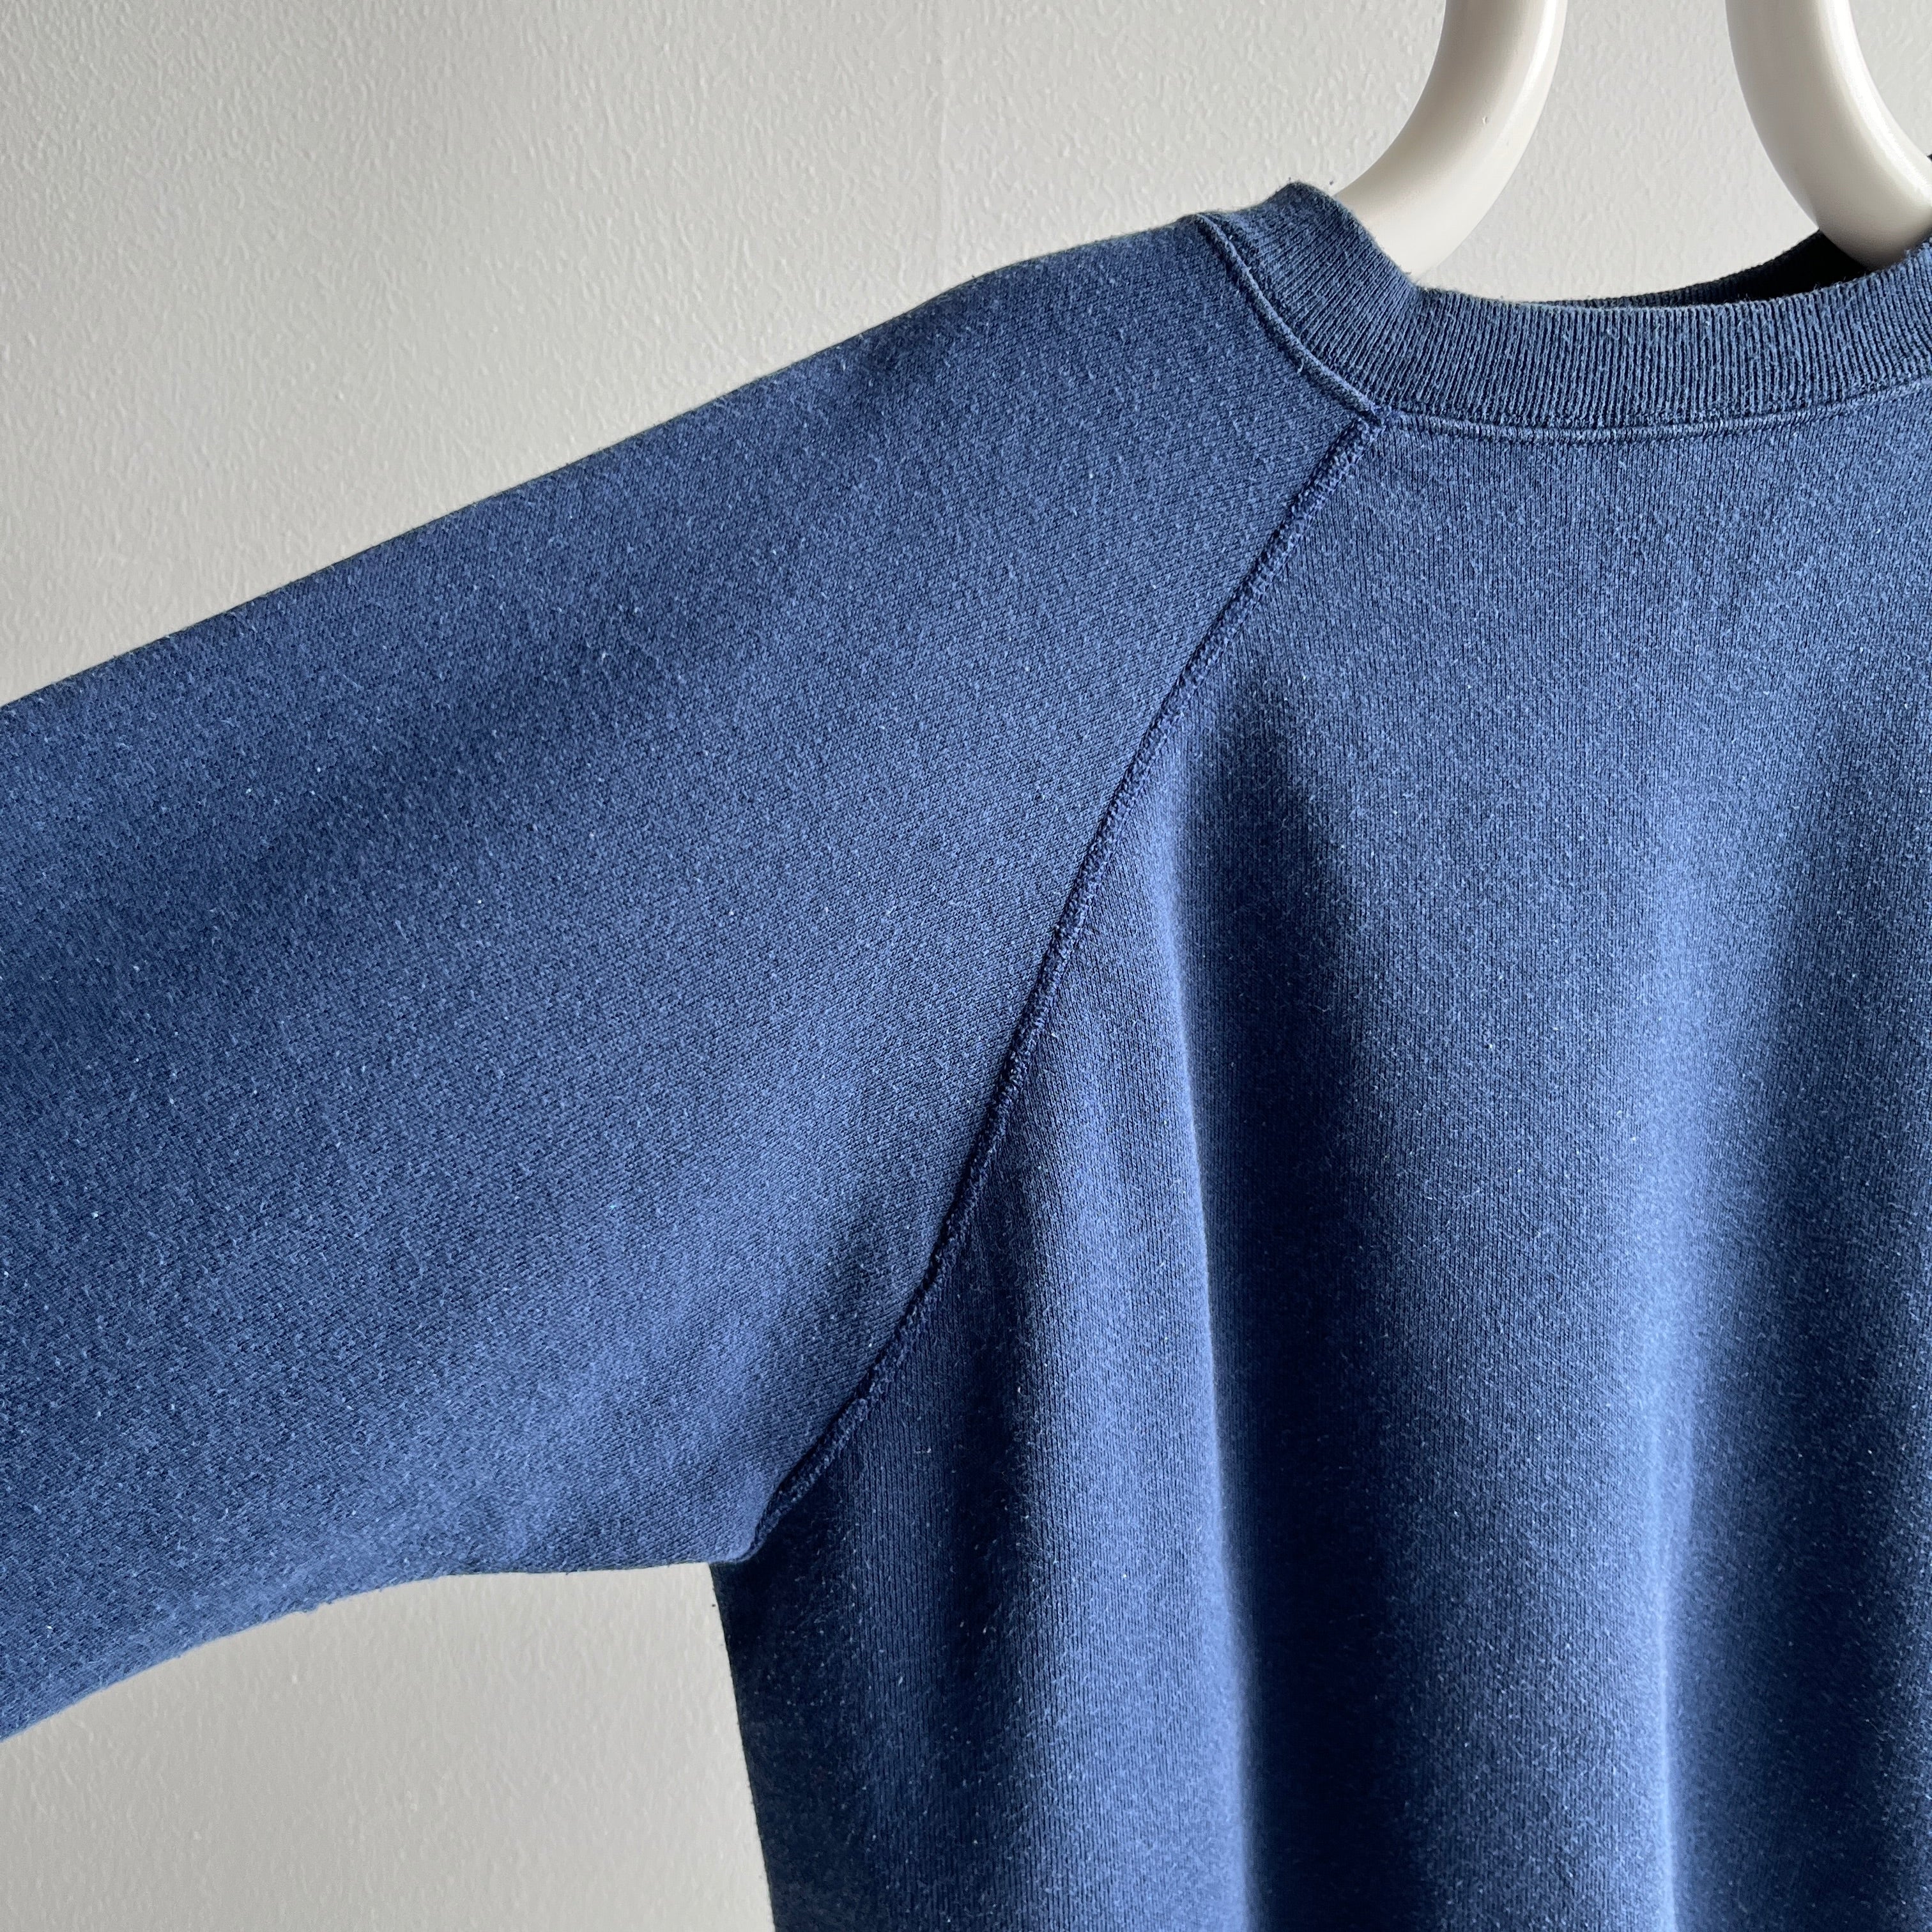 1980/90s Blank Navy Lightly Worn Sweatshirt